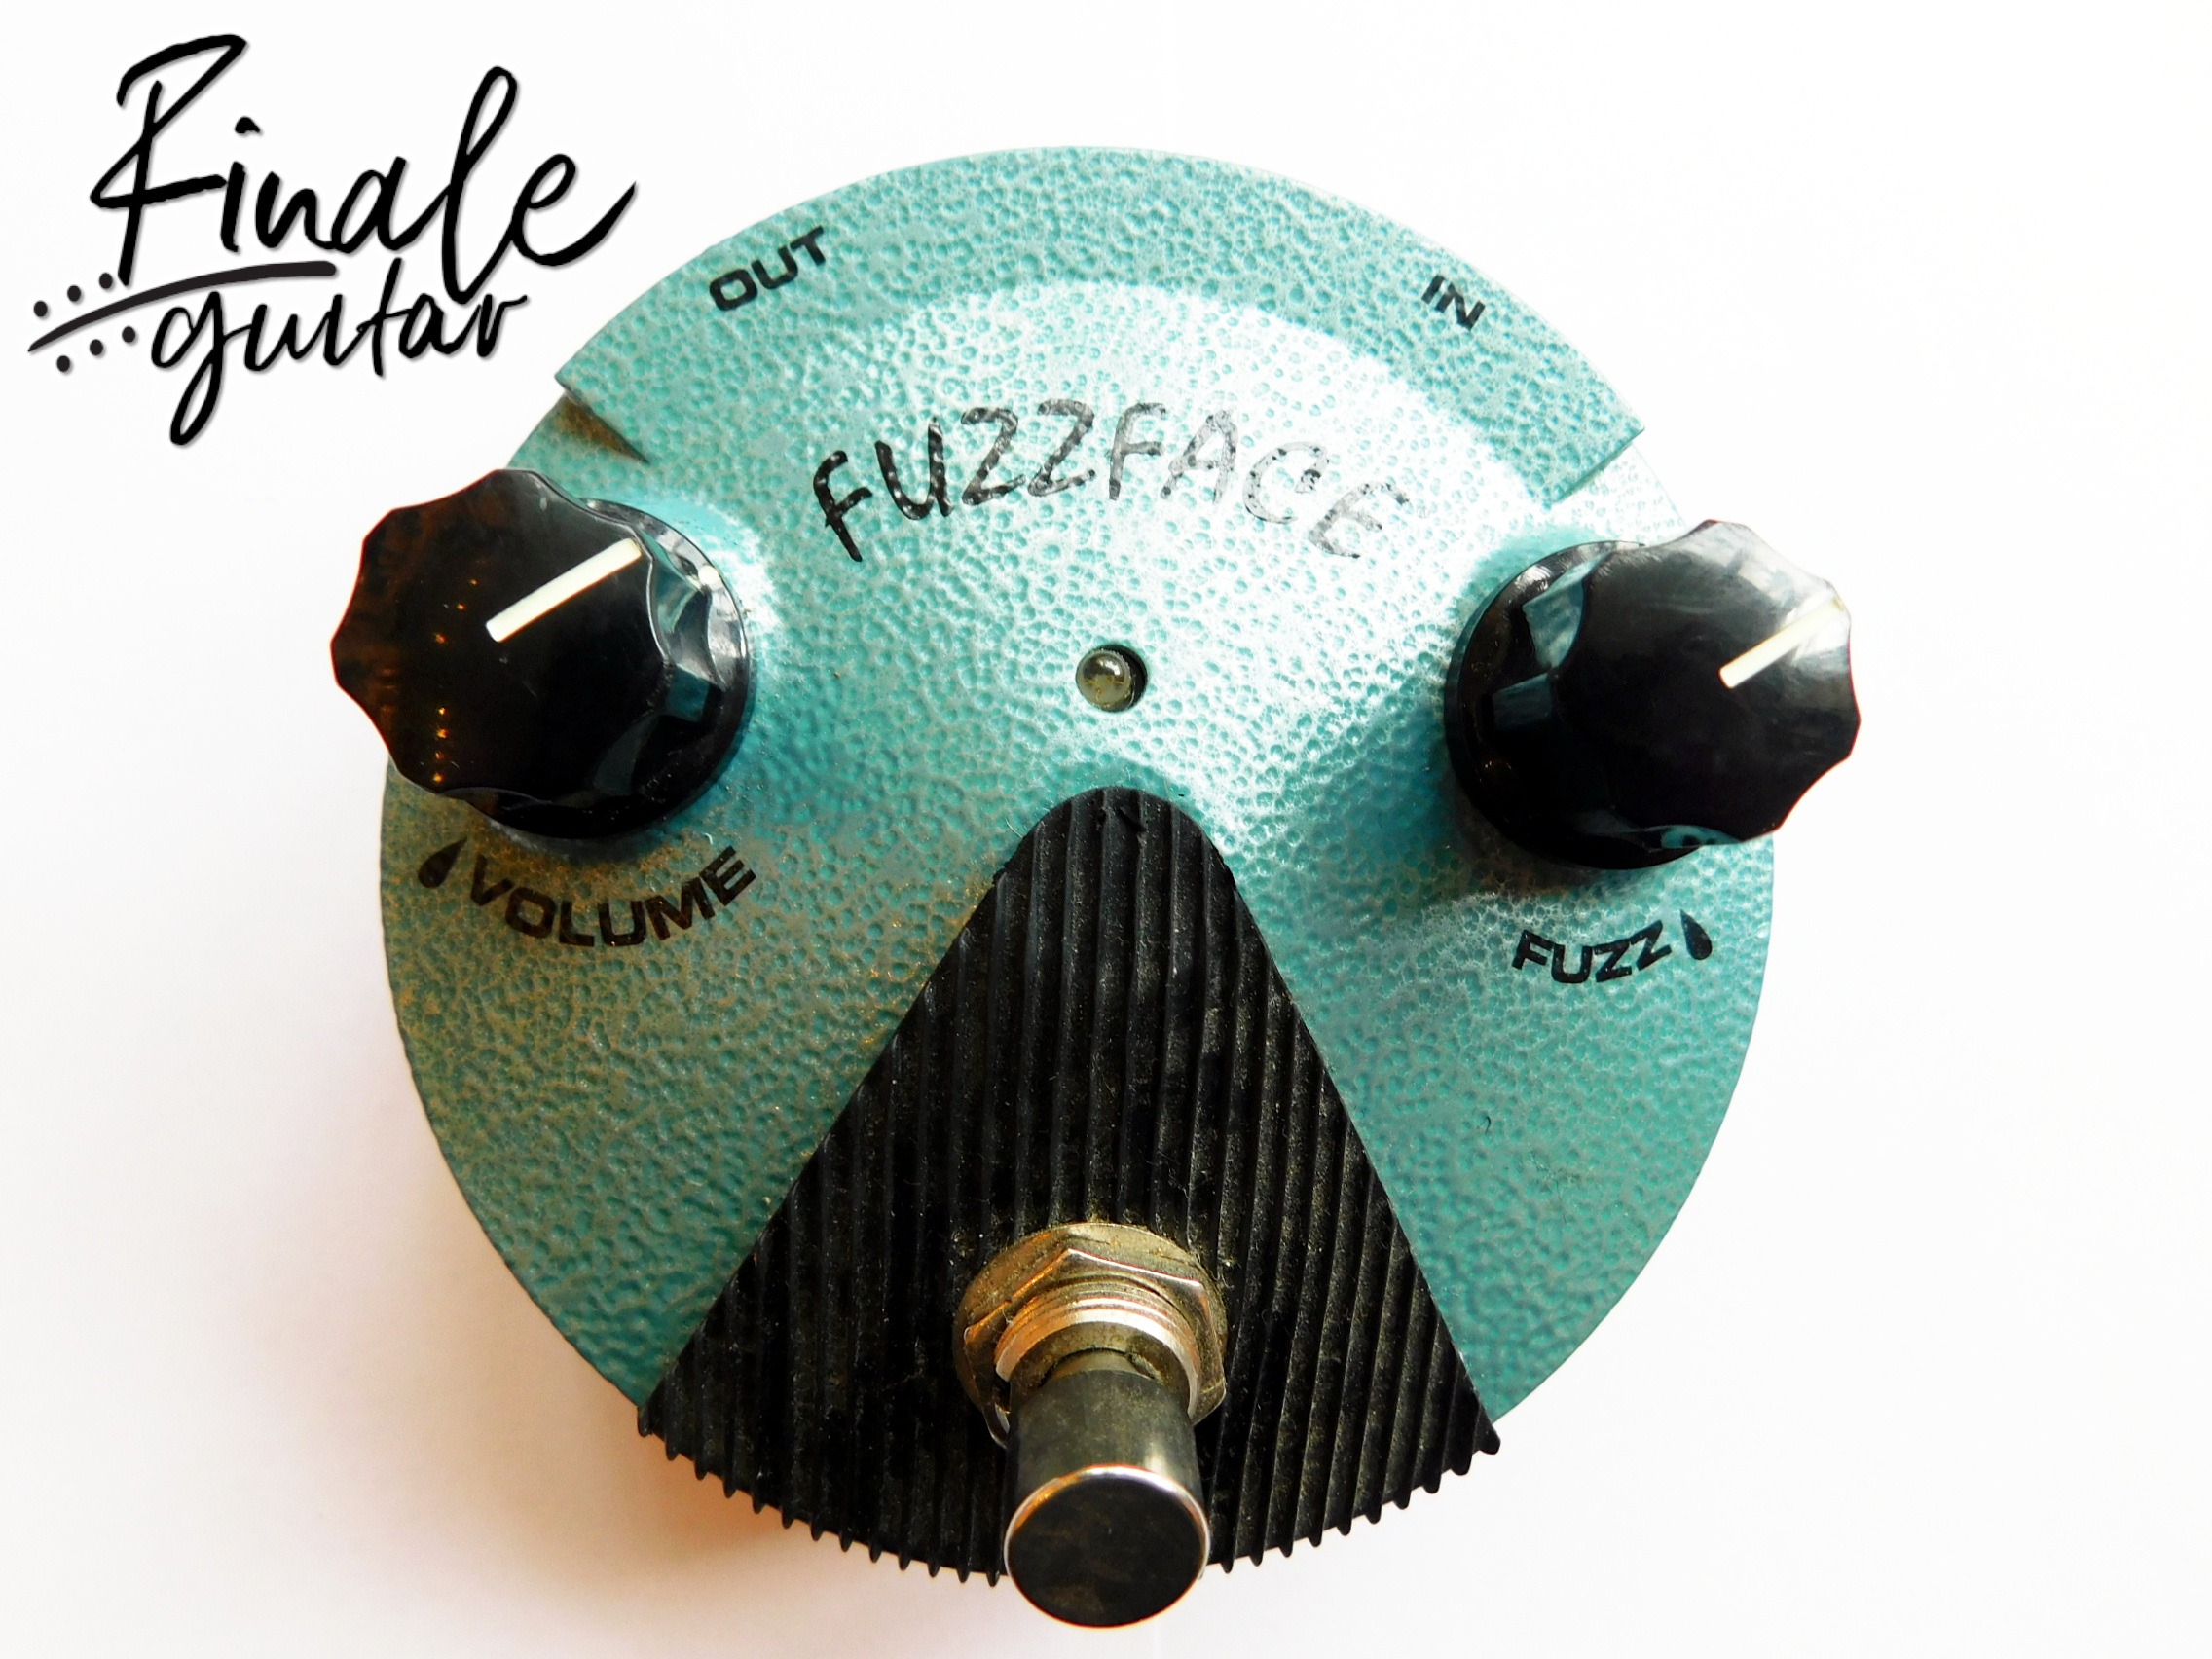 Jimi Hendrix Fuzz Face Mini for sale in our Sheffield guitar shop